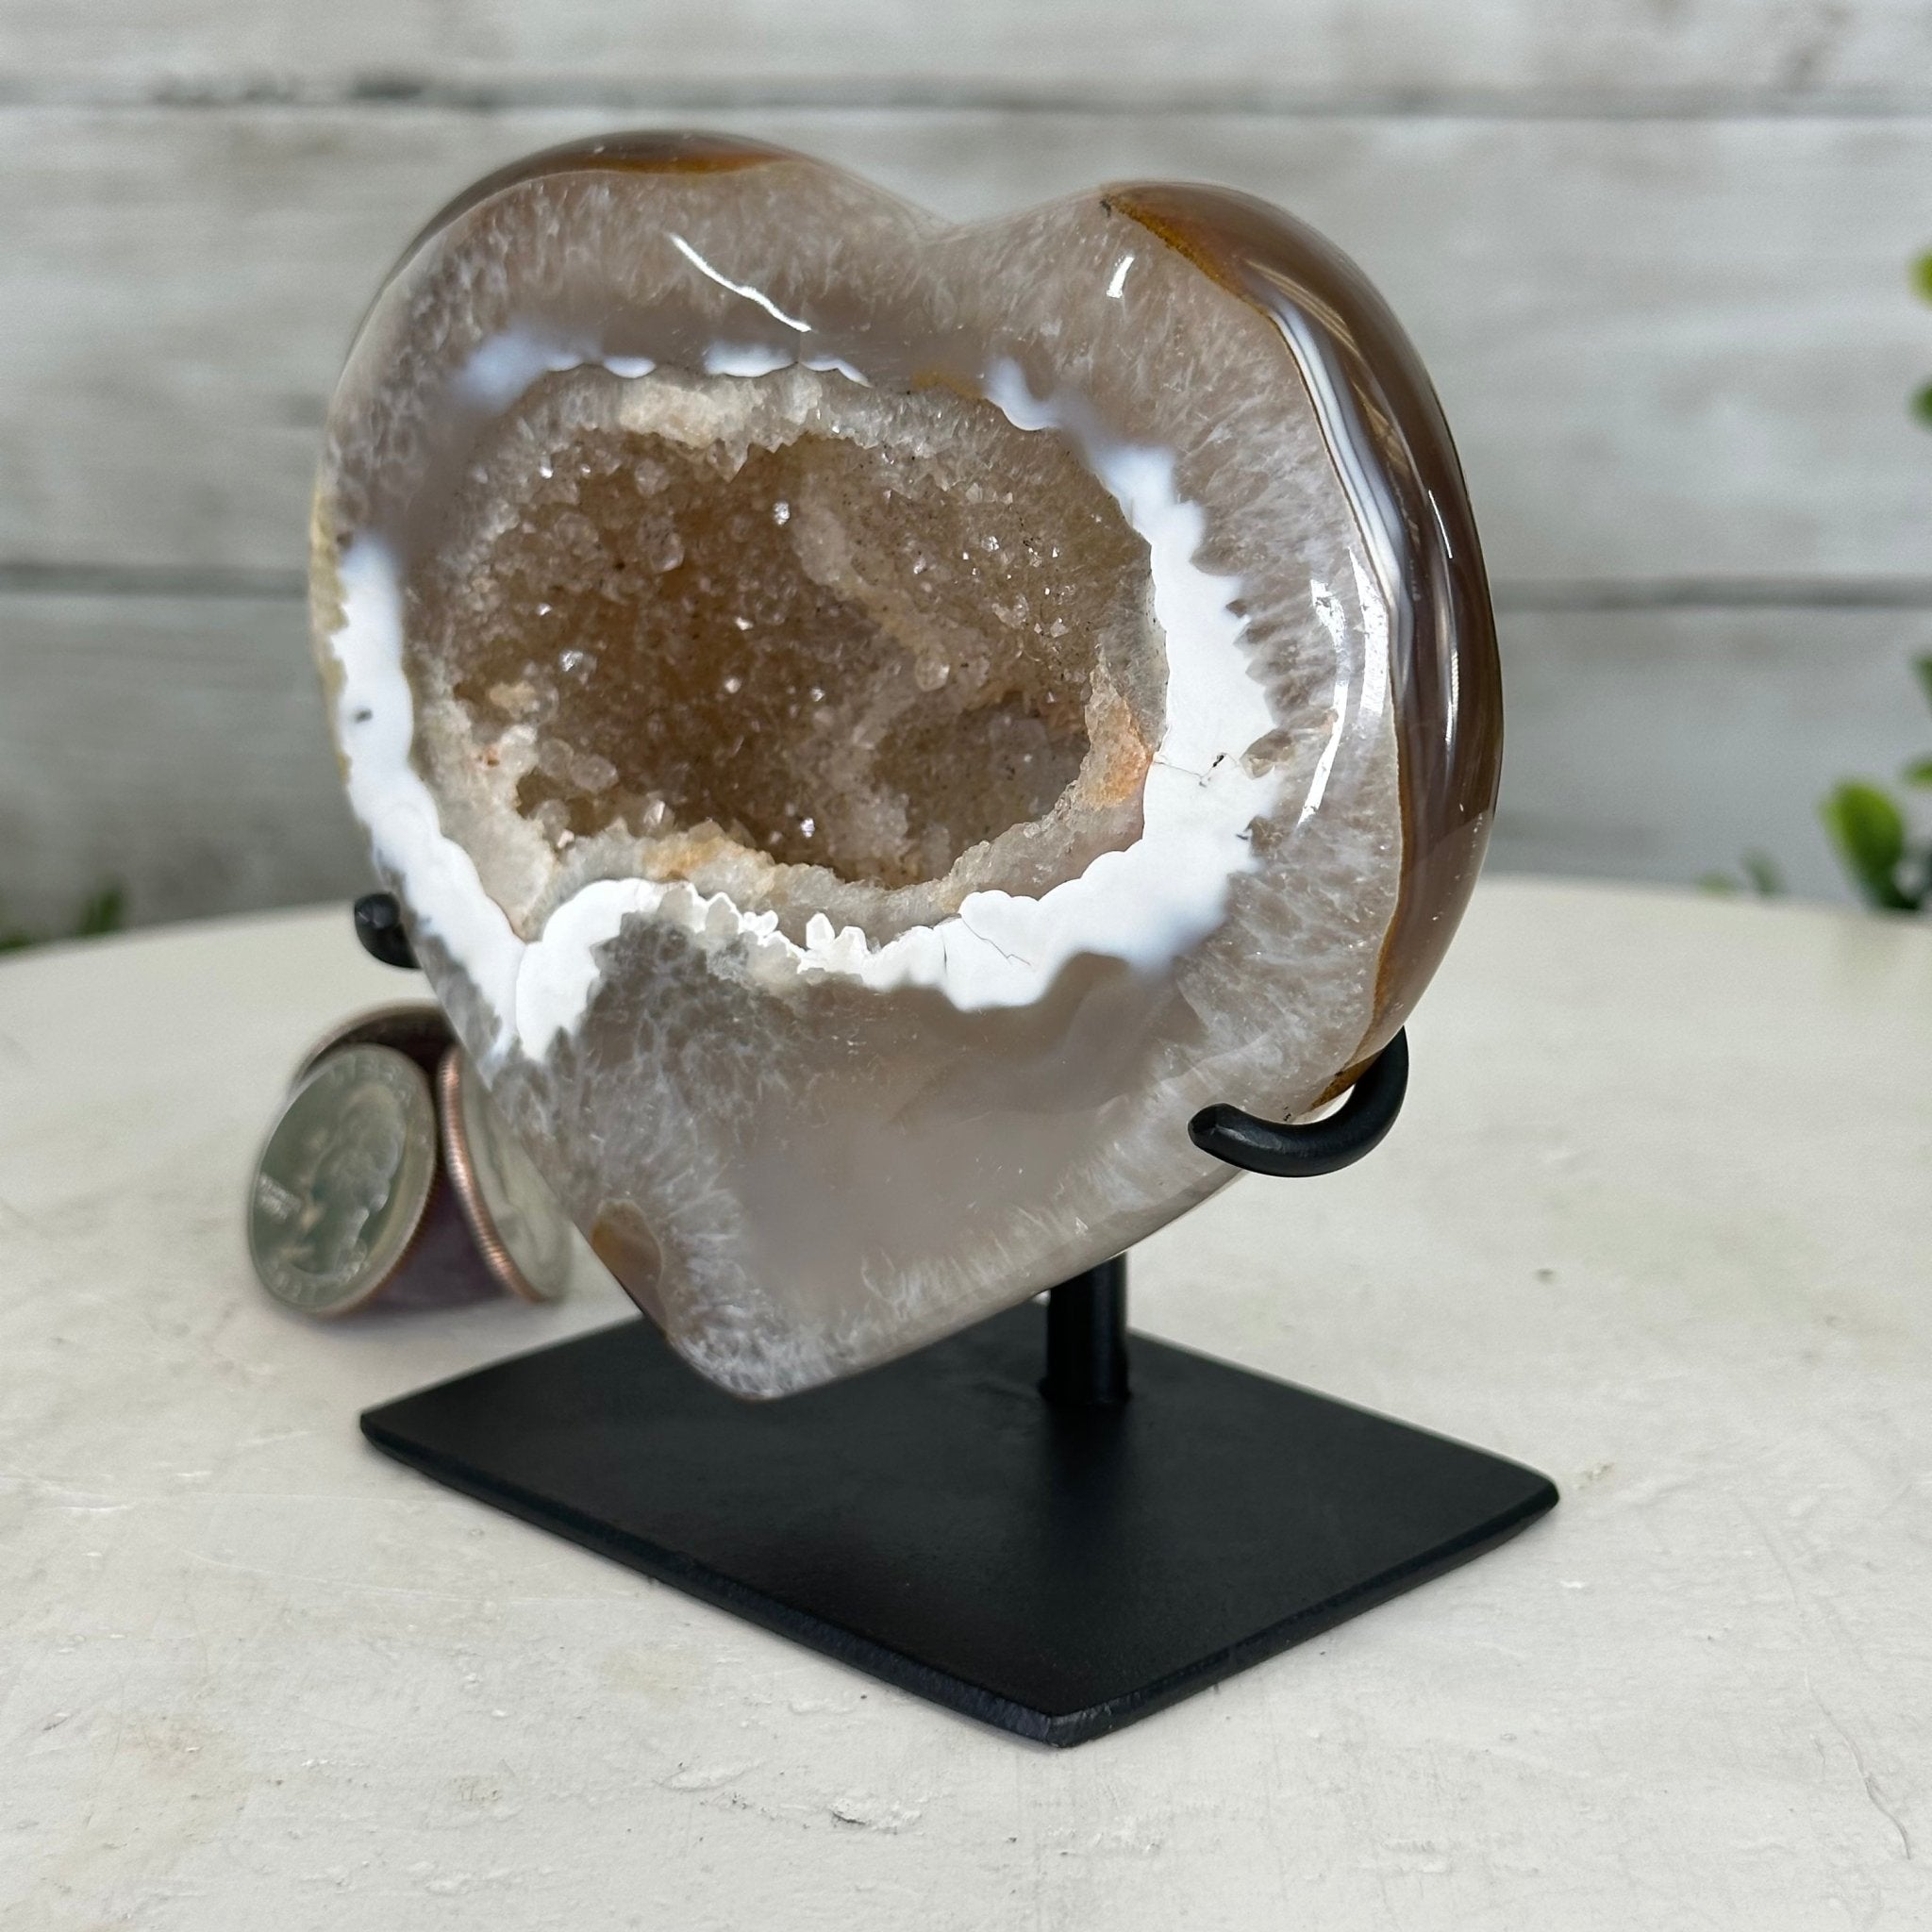 Polished Agate Heart Geode on a Metal Stand, 1.1 lbs & 4.2" Tall, Model #5468-0076 by Brazil Gems - Brazil GemsBrazil GemsPolished Agate Heart Geode on a Metal Stand, 1.1 lbs & 4.2" Tall, Model #5468-0076 by Brazil GemsHearts5468-0076